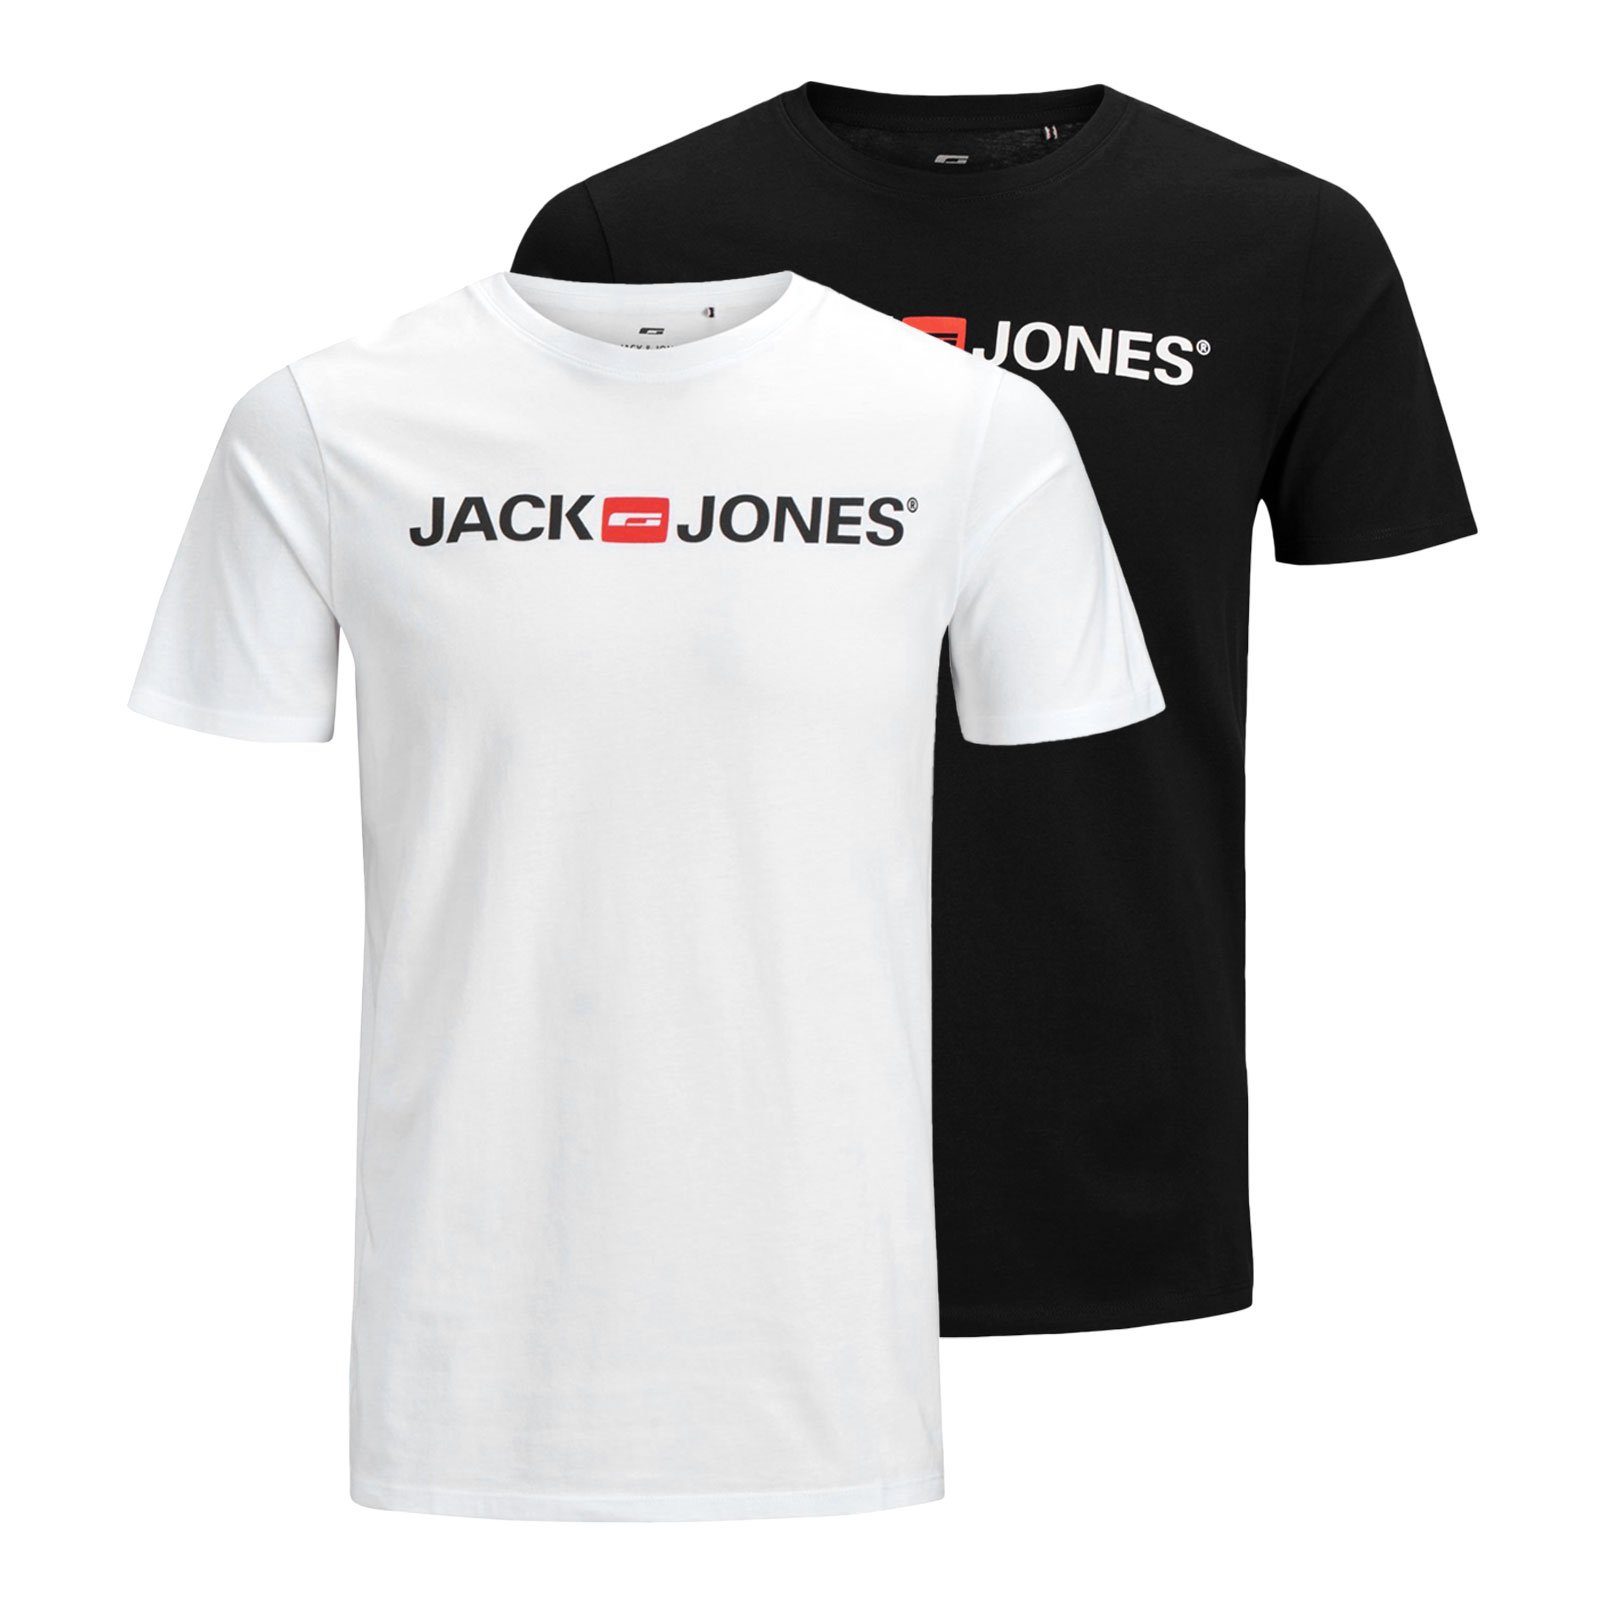 Crew Logo black mit 2er Pack T-Shirt white & / Jack Neck Tee Markenschriftzug Jones